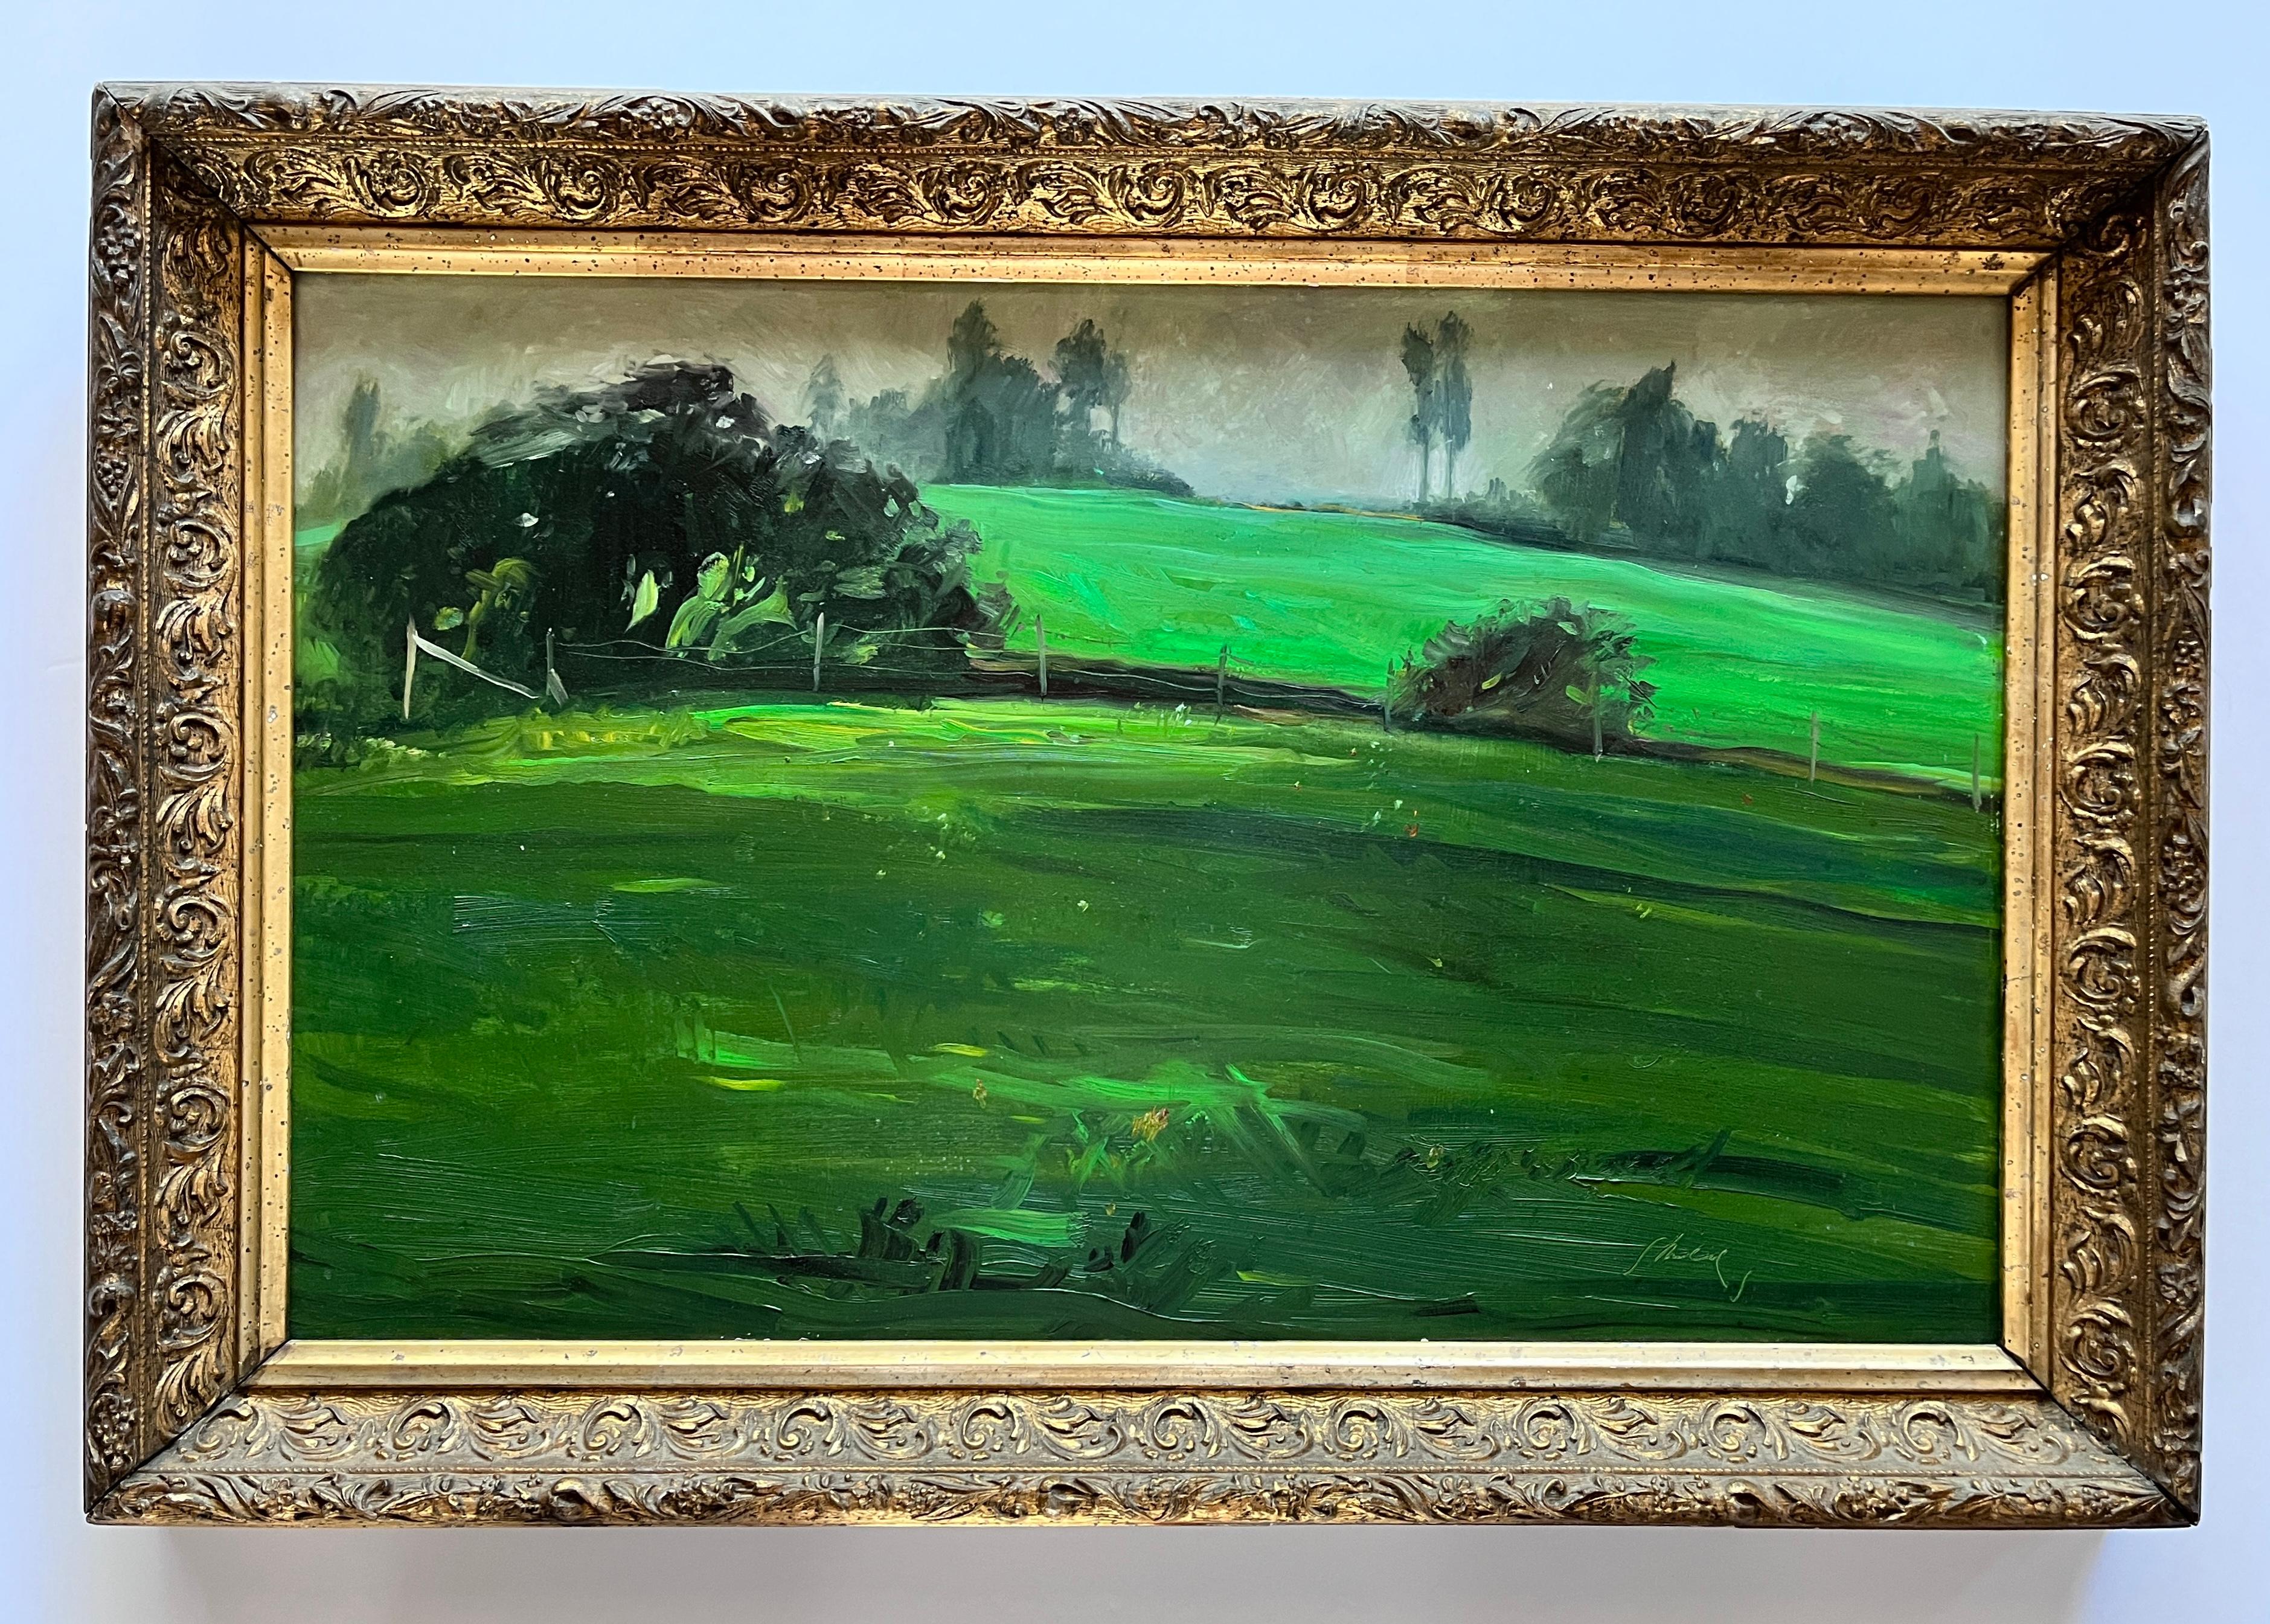 William Shields  Still-Life Painting - "Green Landscape" Realist Oil on Canvas Award Winning Illustrator Bill Shields